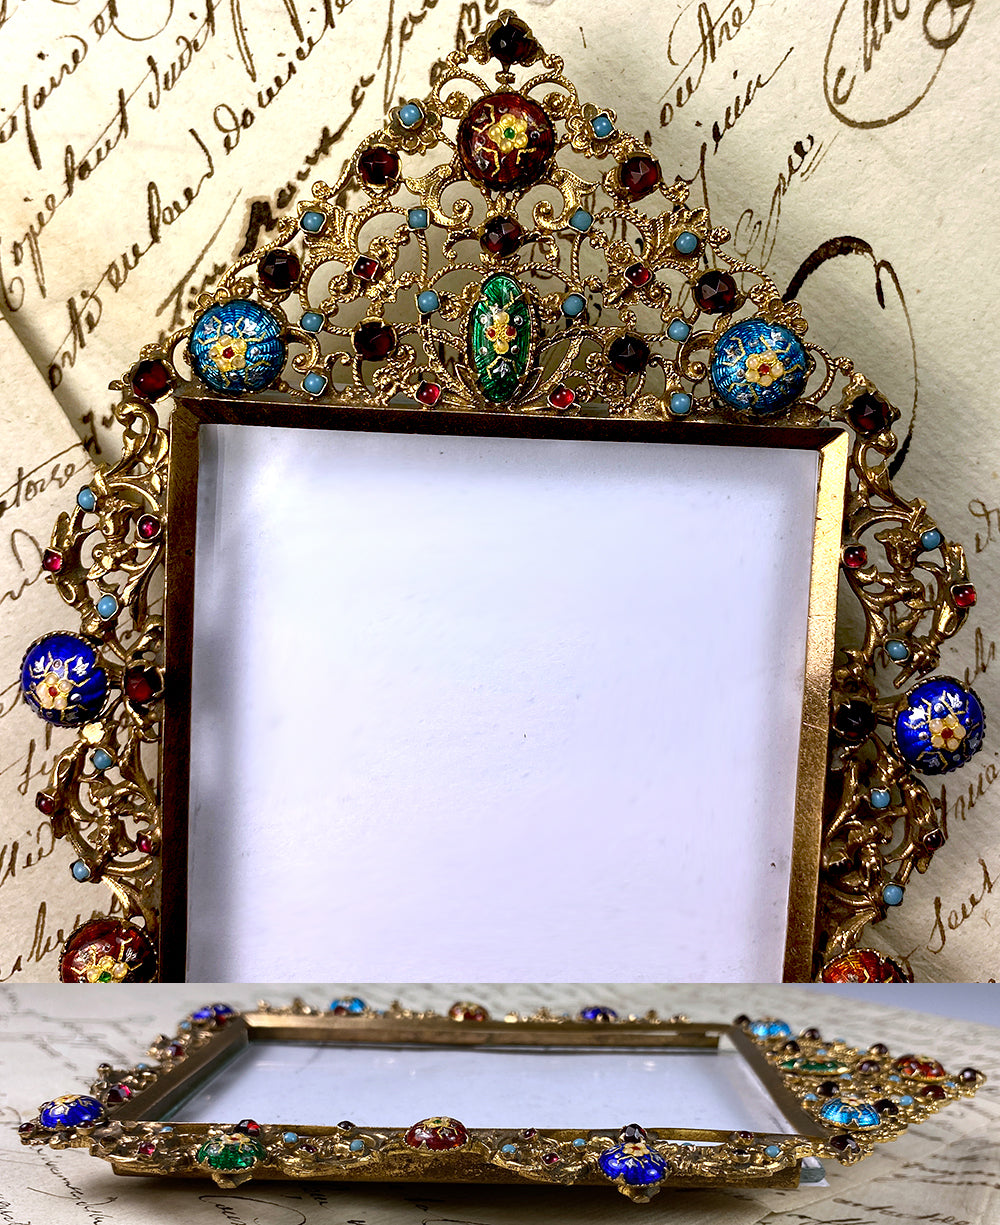 Antique French Jeweled and Kiln-fired Bressan Enamel Easel Frame, c.1860s Carte-de-visite Photo Frame